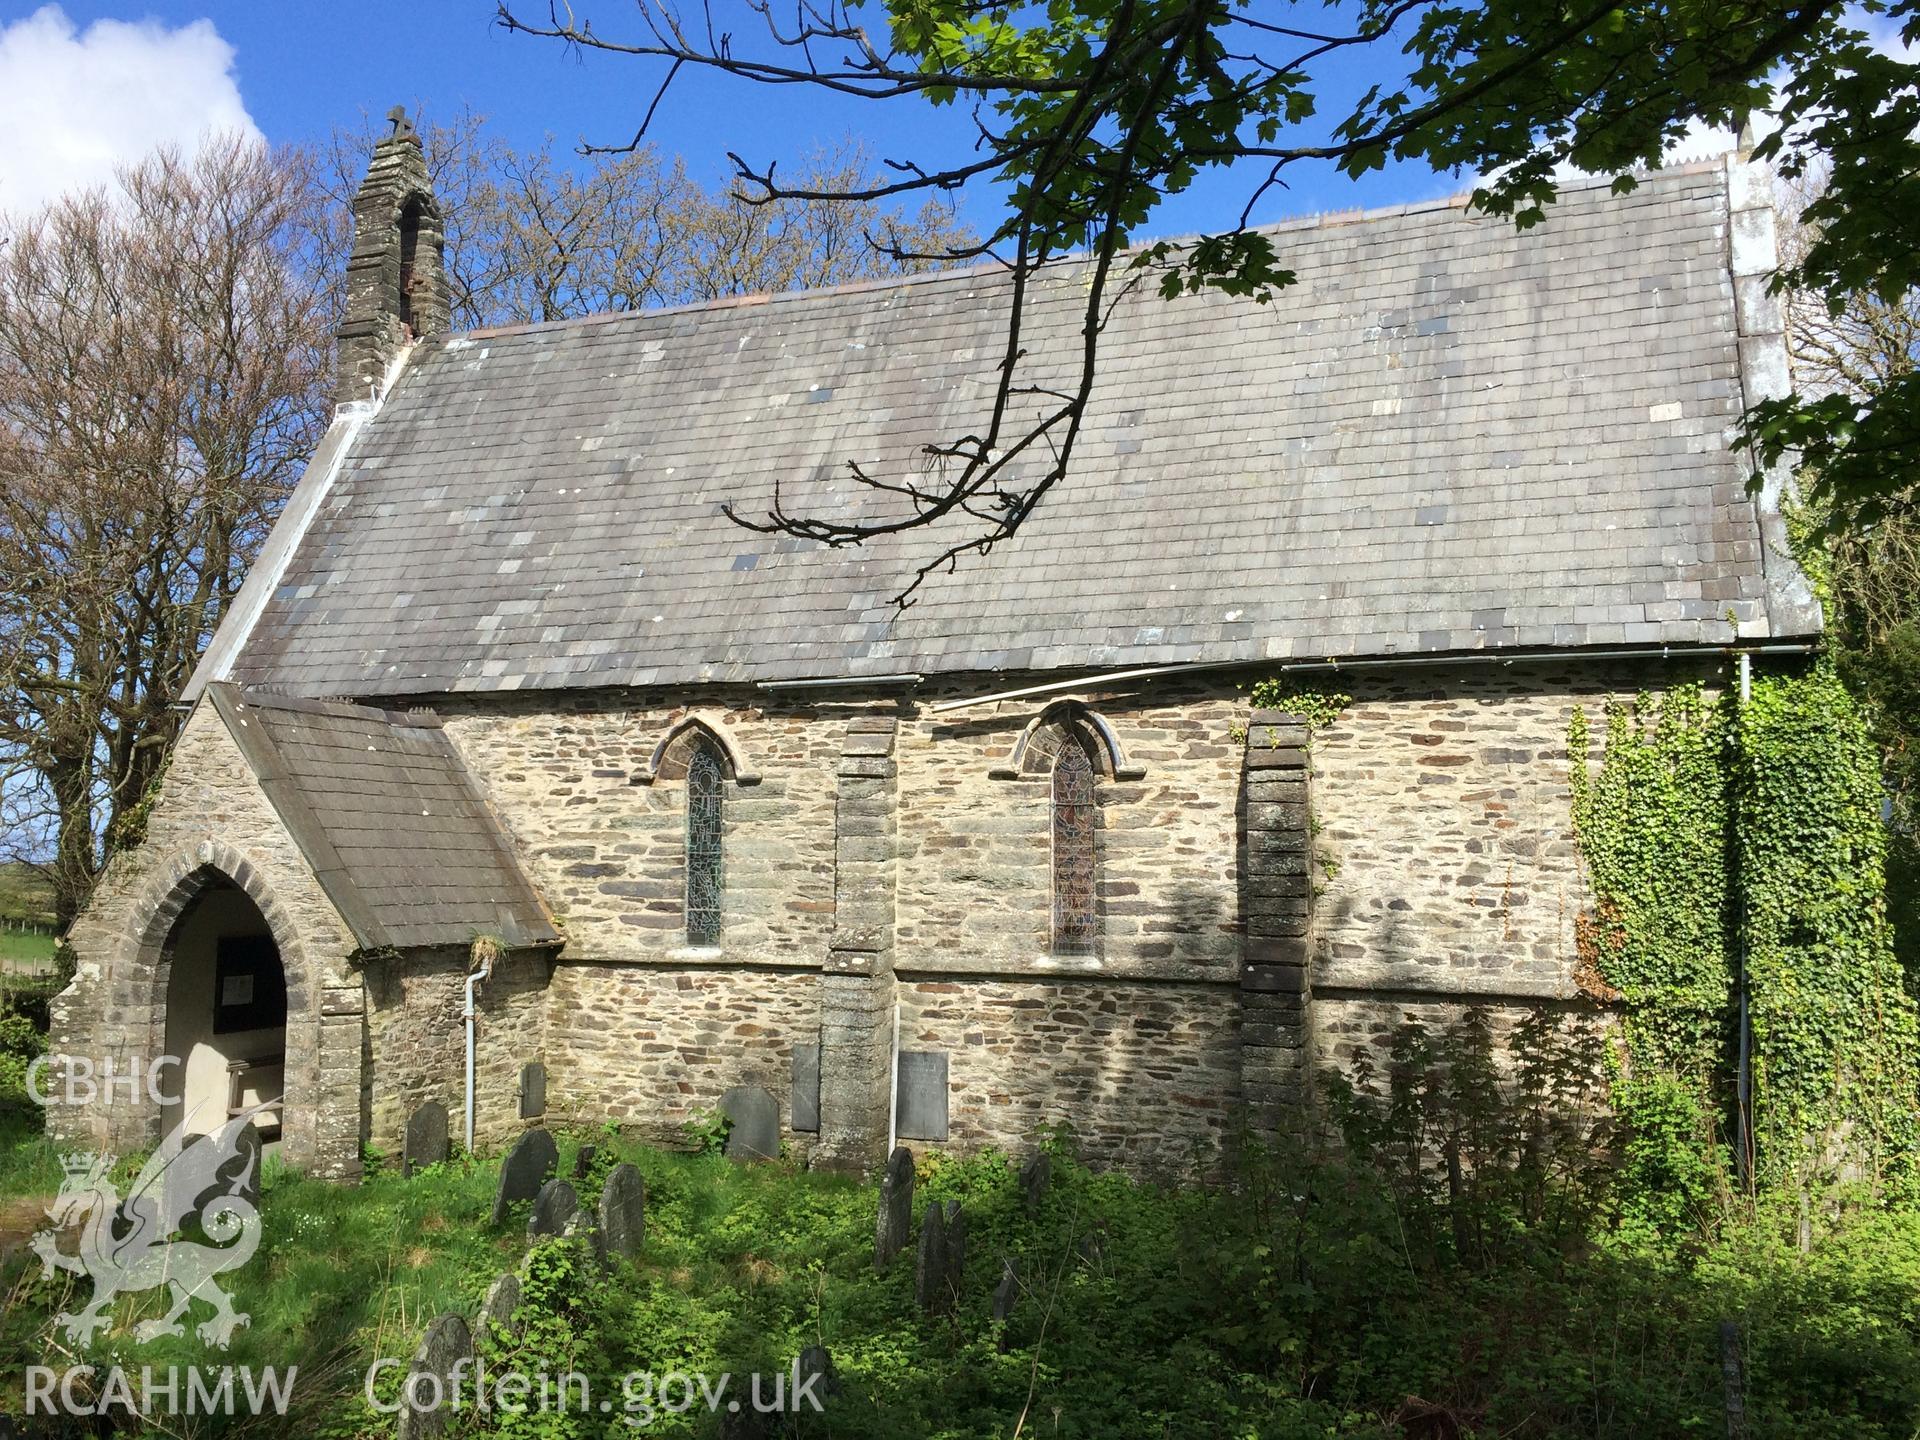 Colour photo showing Llancynfelyn Church,  produced by Paul R. Davis, 23rd April 2017.